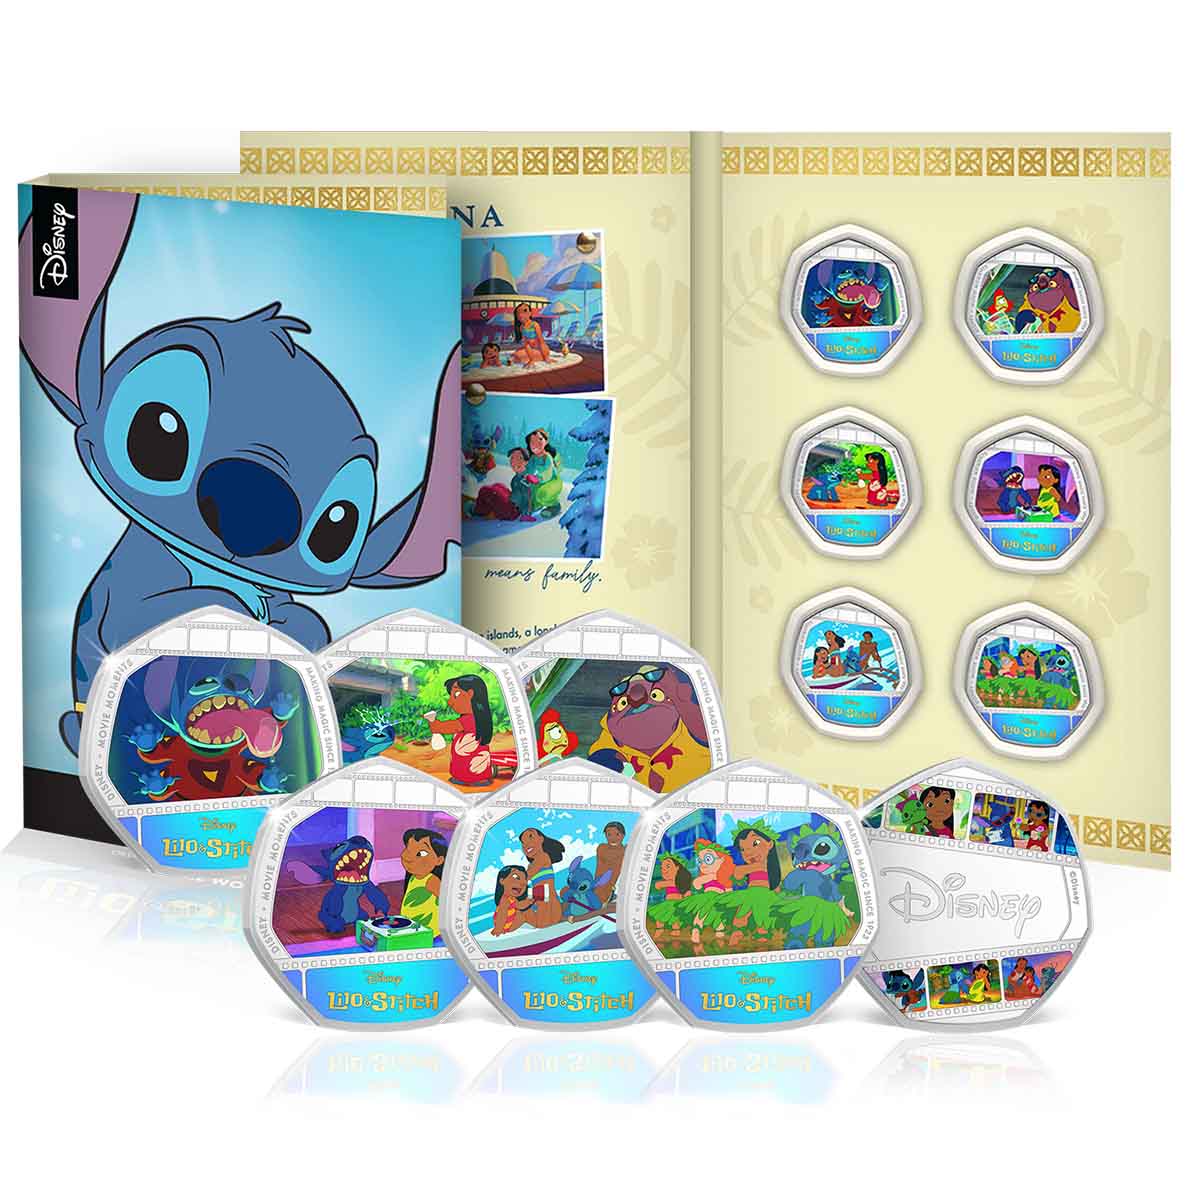 The Disney Movie Moments Complete Set - Lilo & Stitch